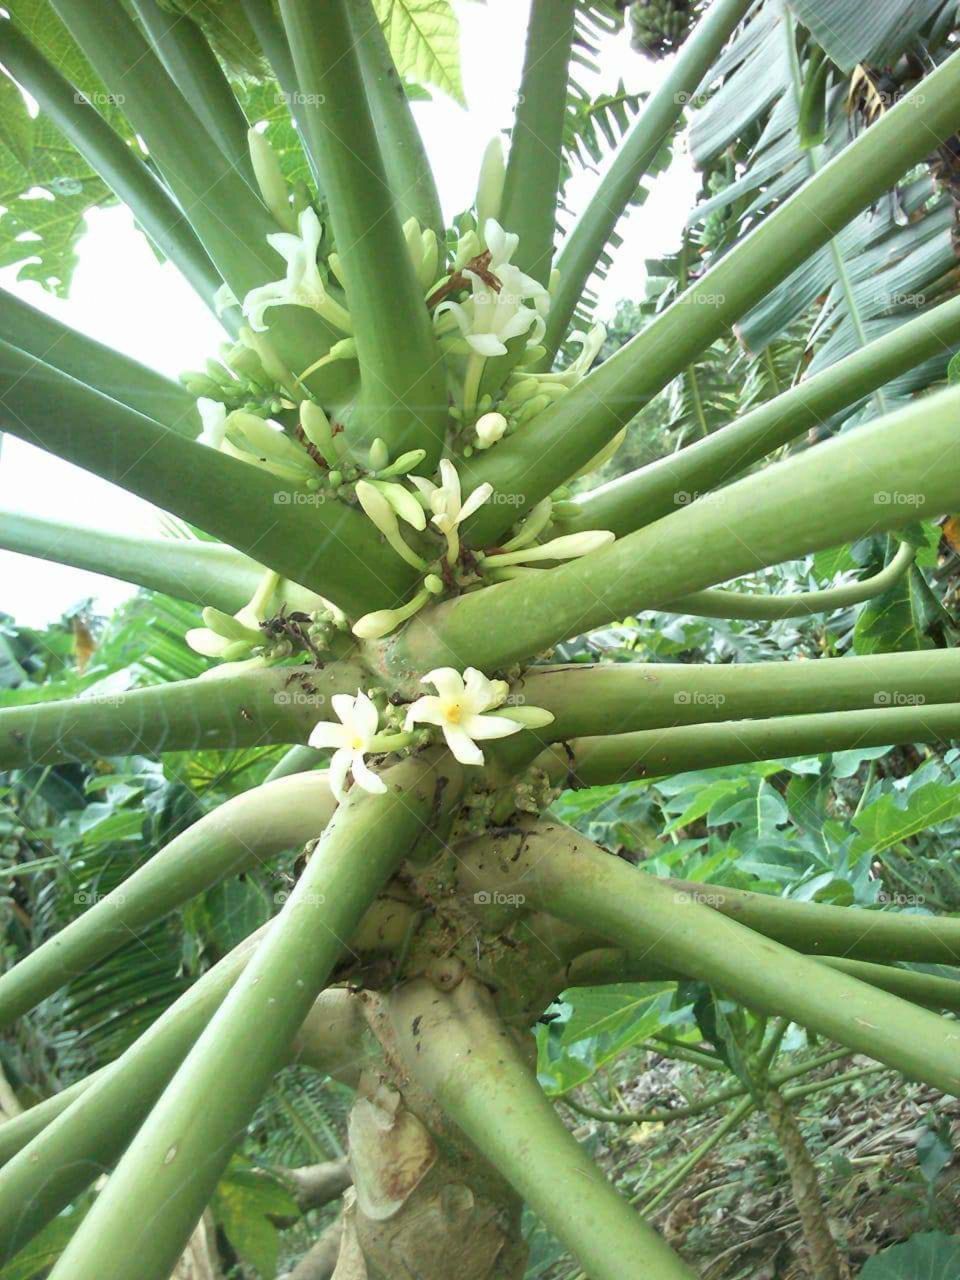 the papaya tree